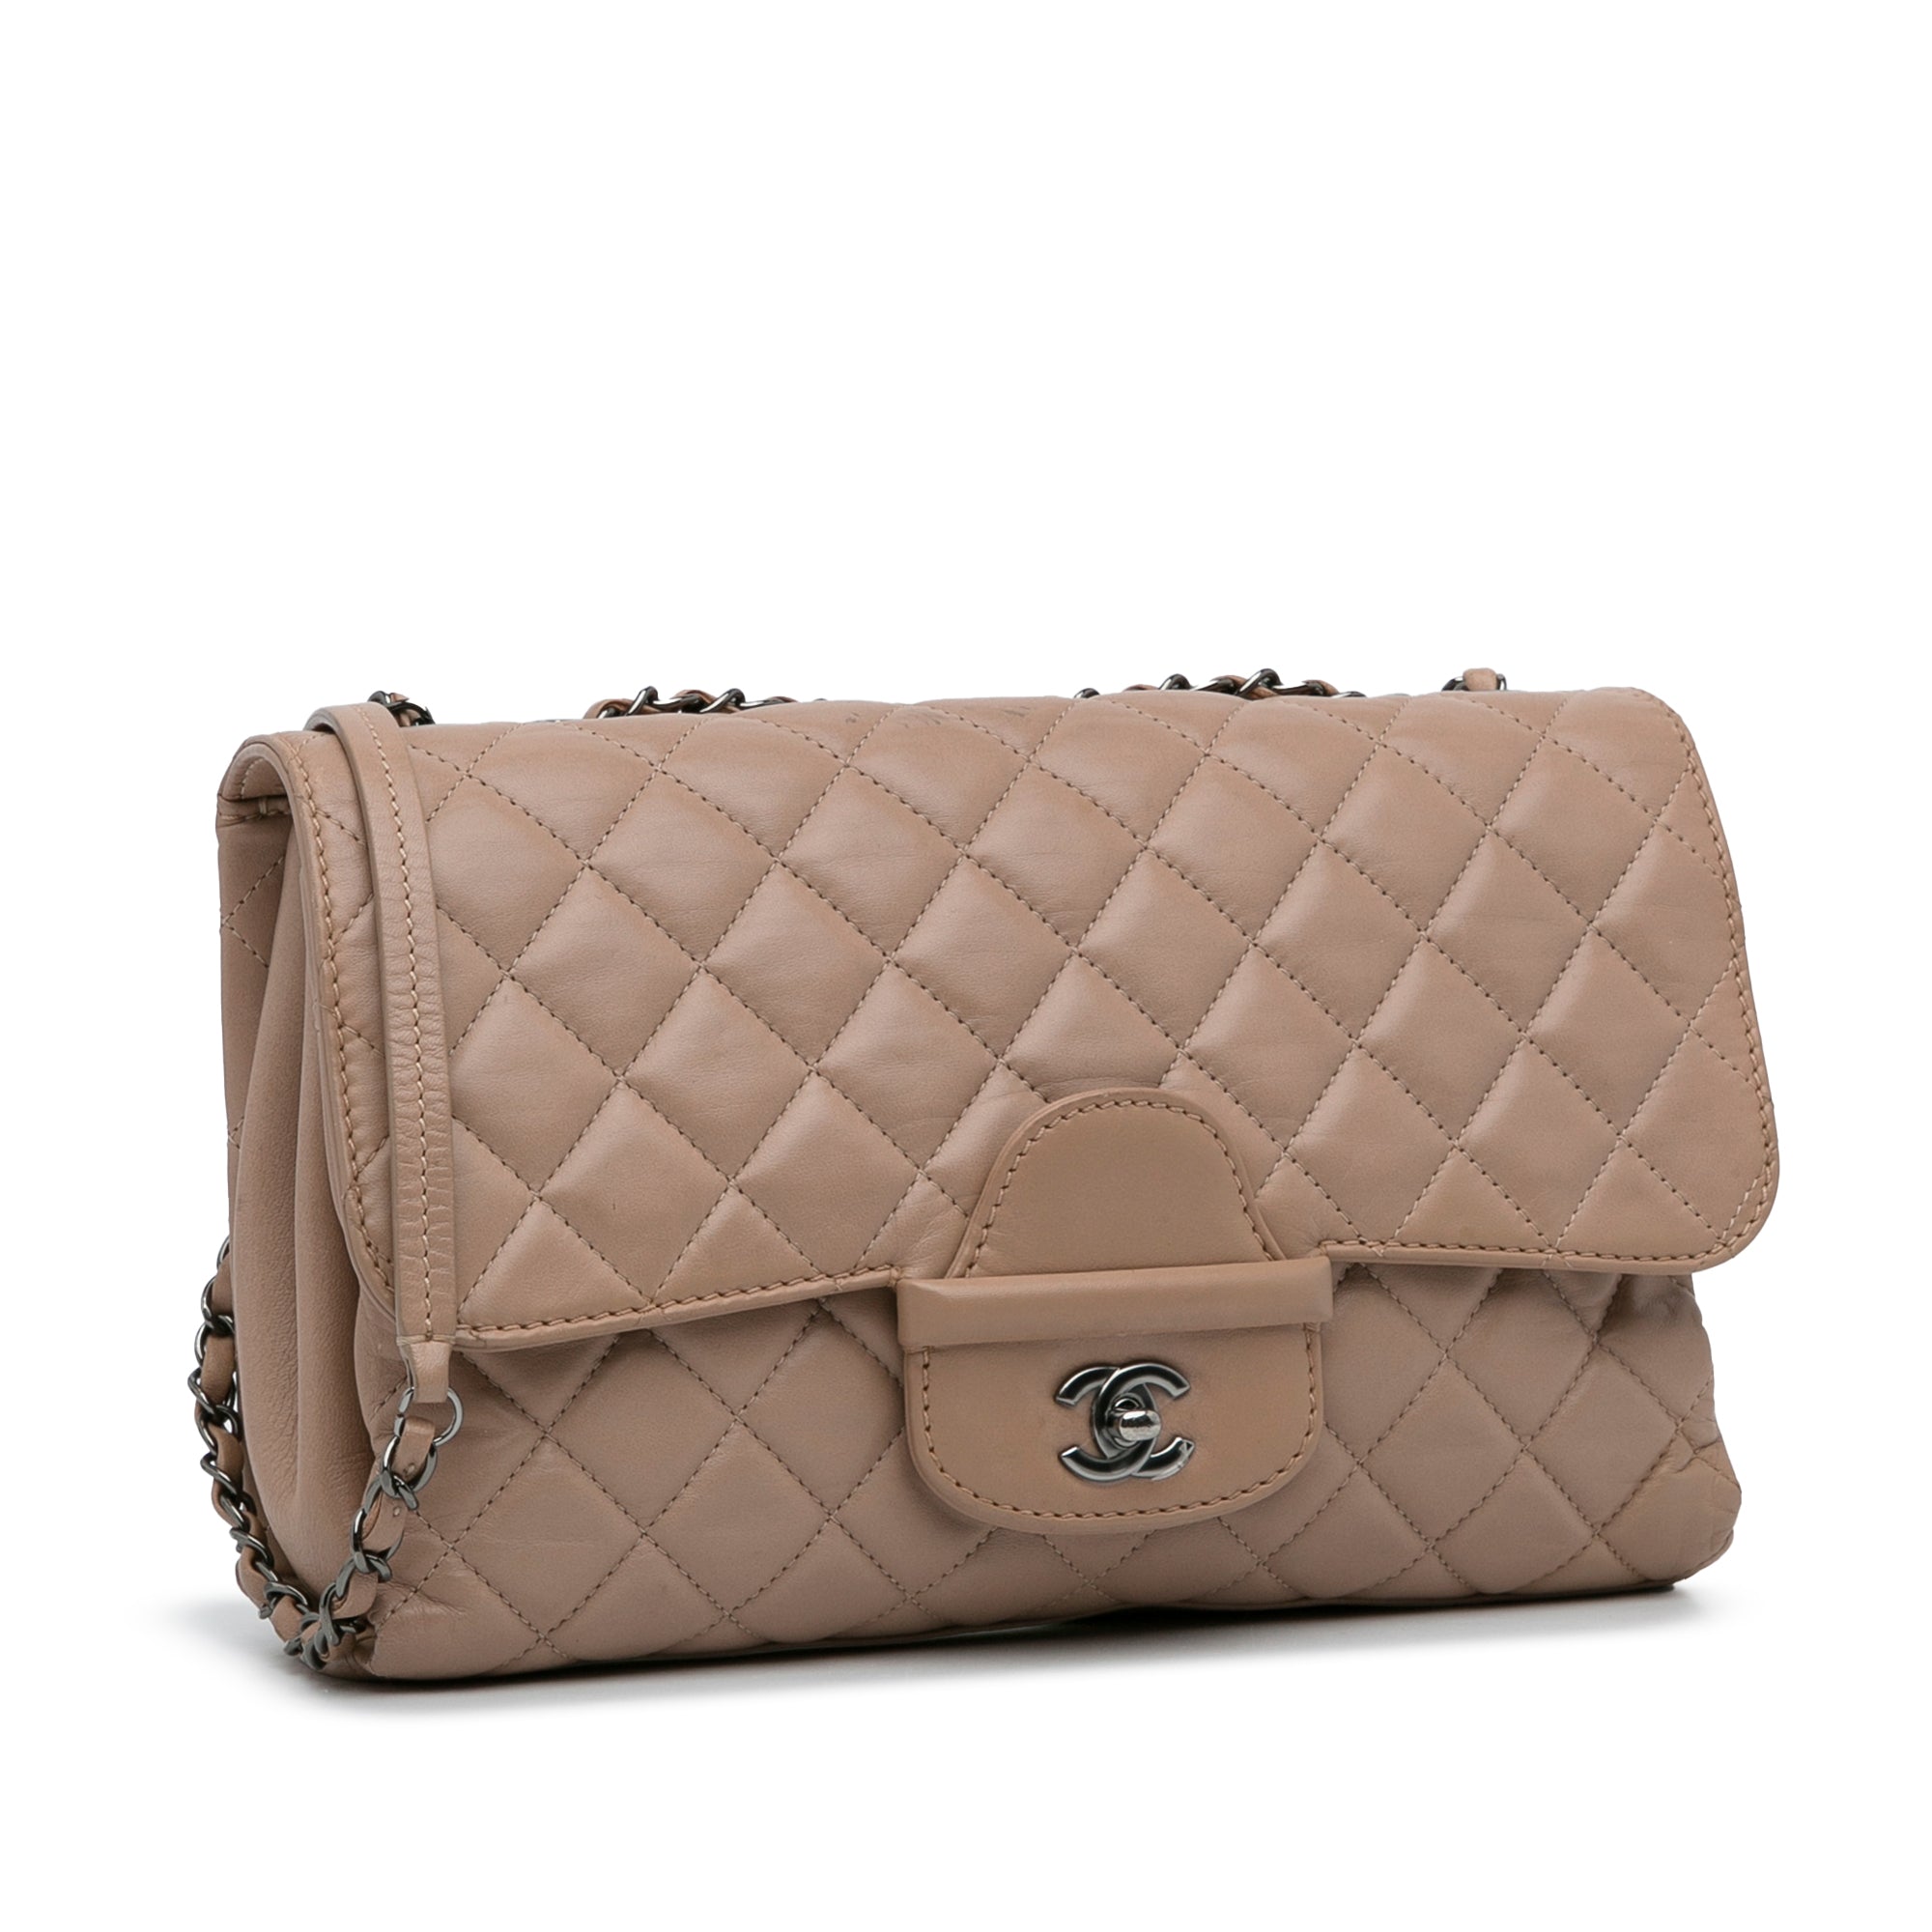 Heritage Vintage: Chanel Brown Lambskin Leather Shoulder Bag with